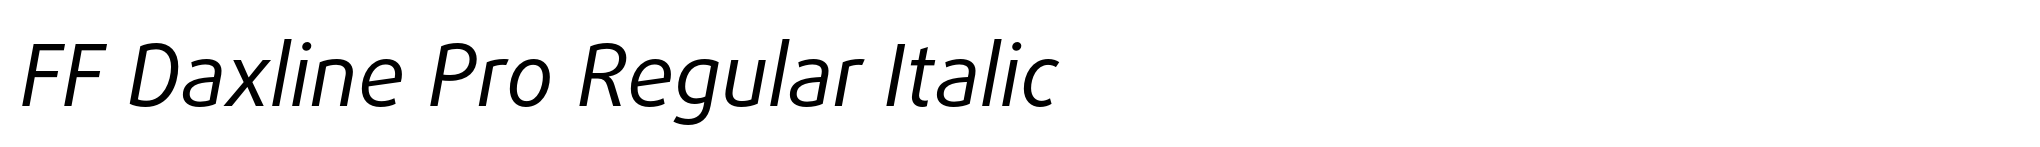 FF Daxline Pro Regular Italic image